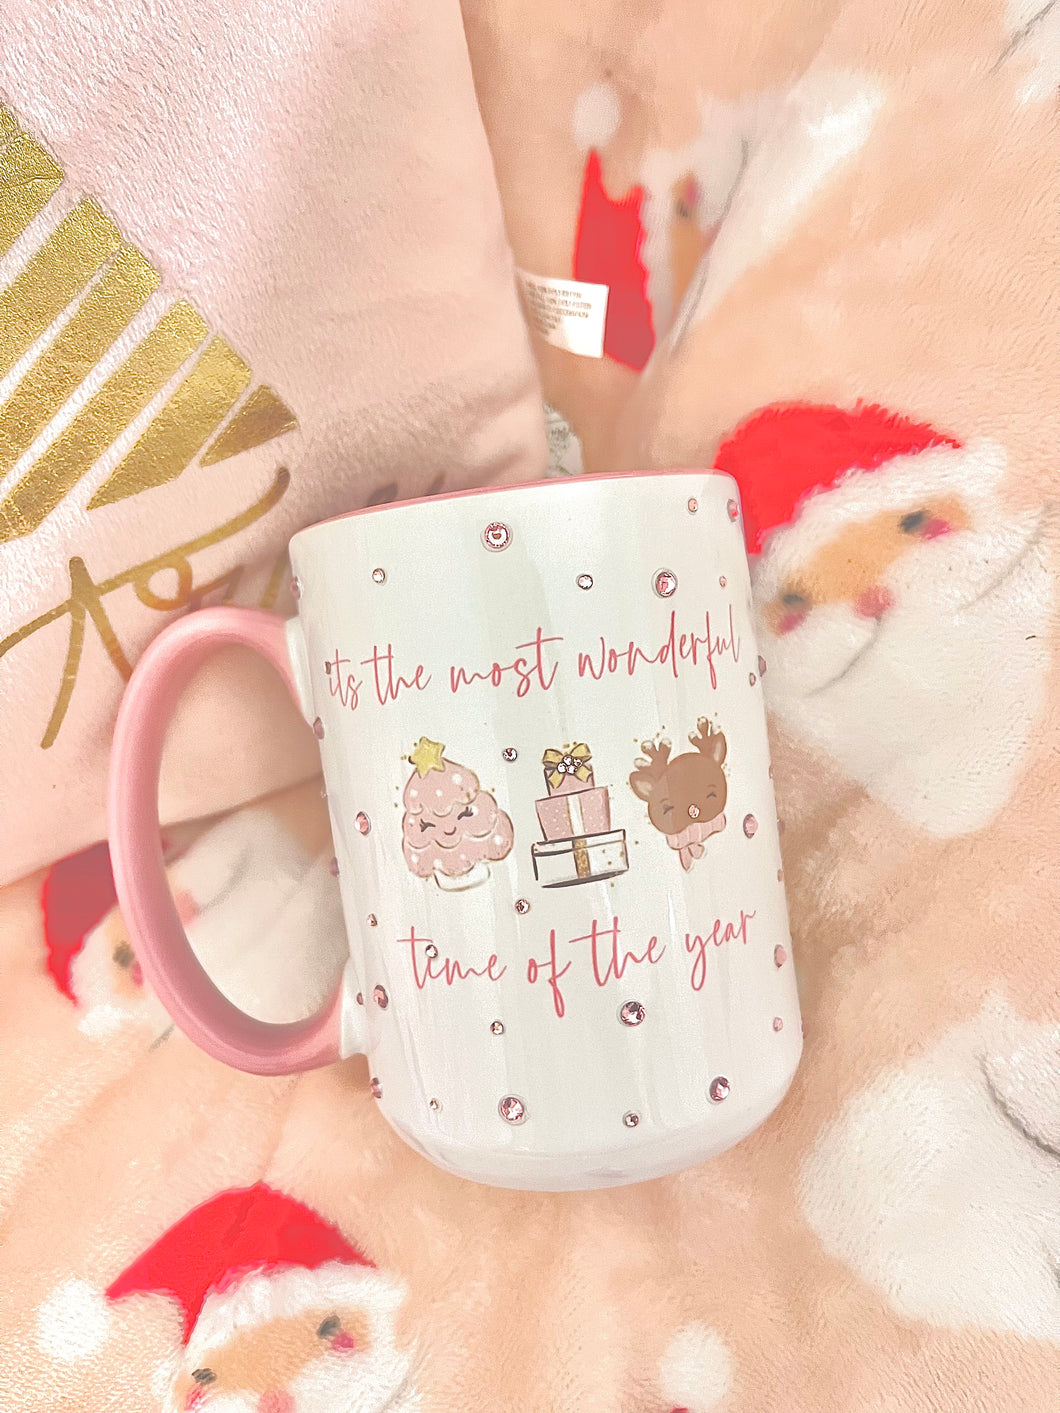 Most wonderful time of the year mug